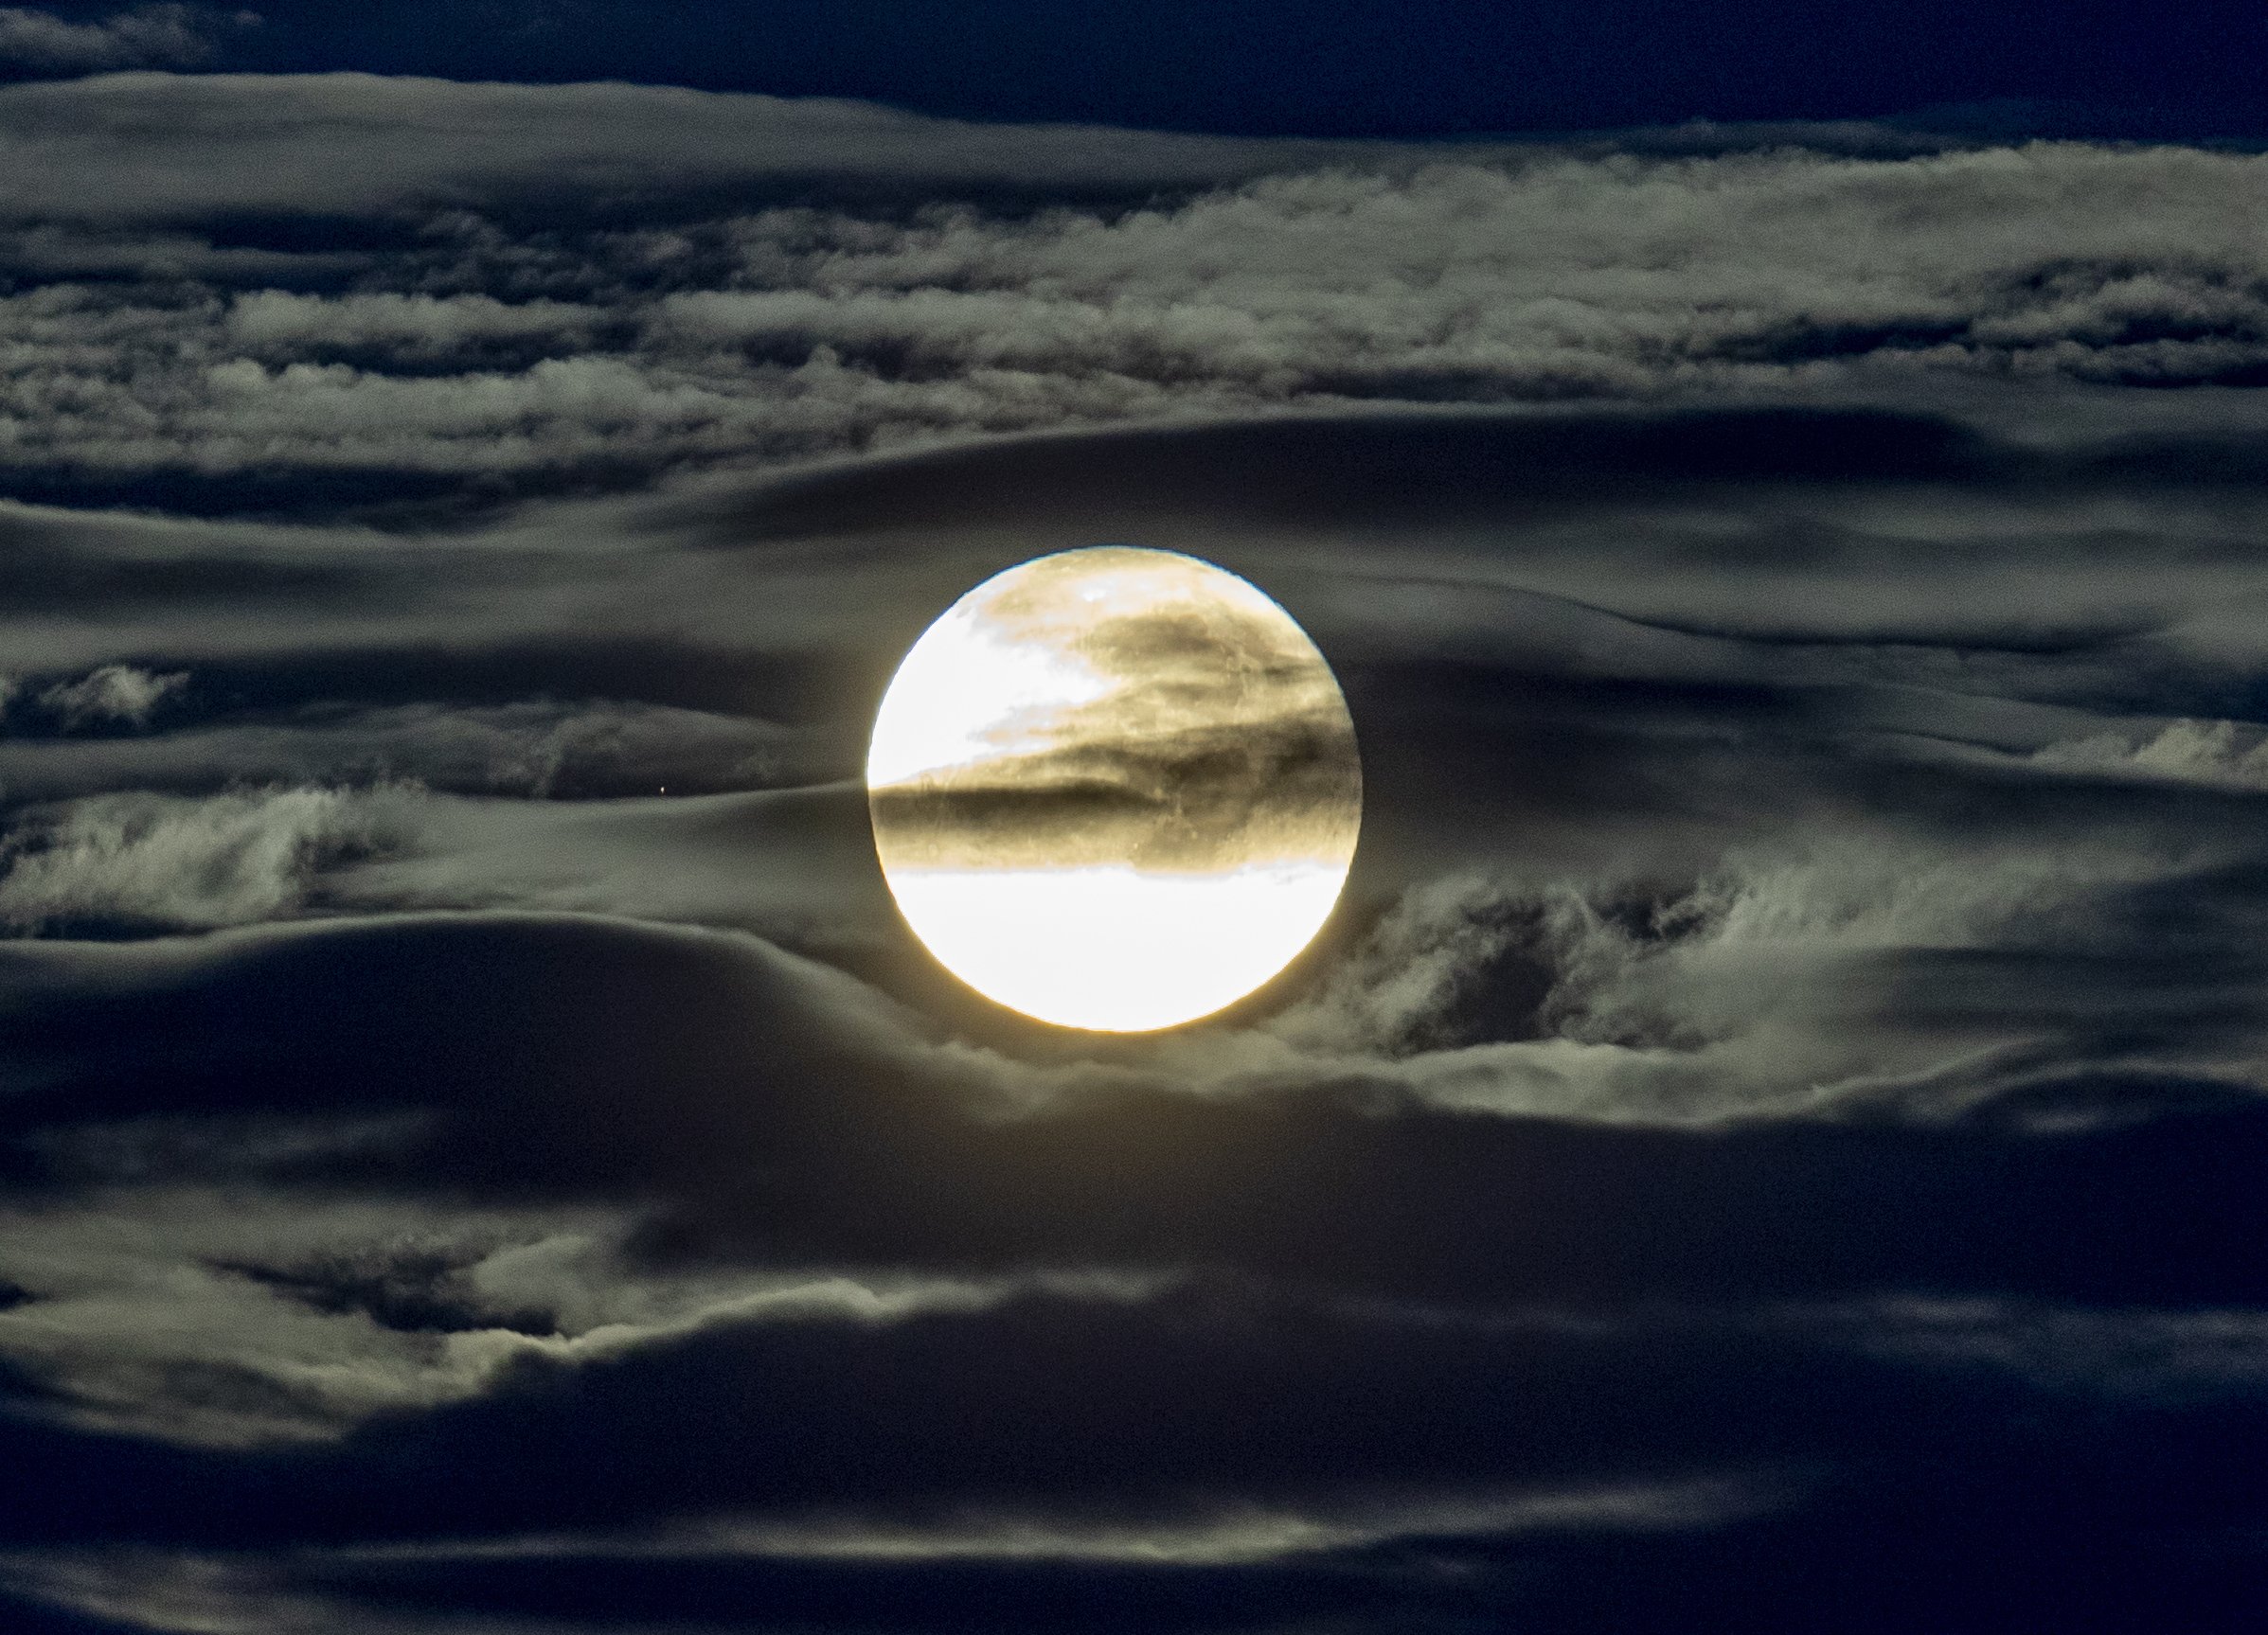 New measurements show moon has hazardous radiation levels - Associated Press